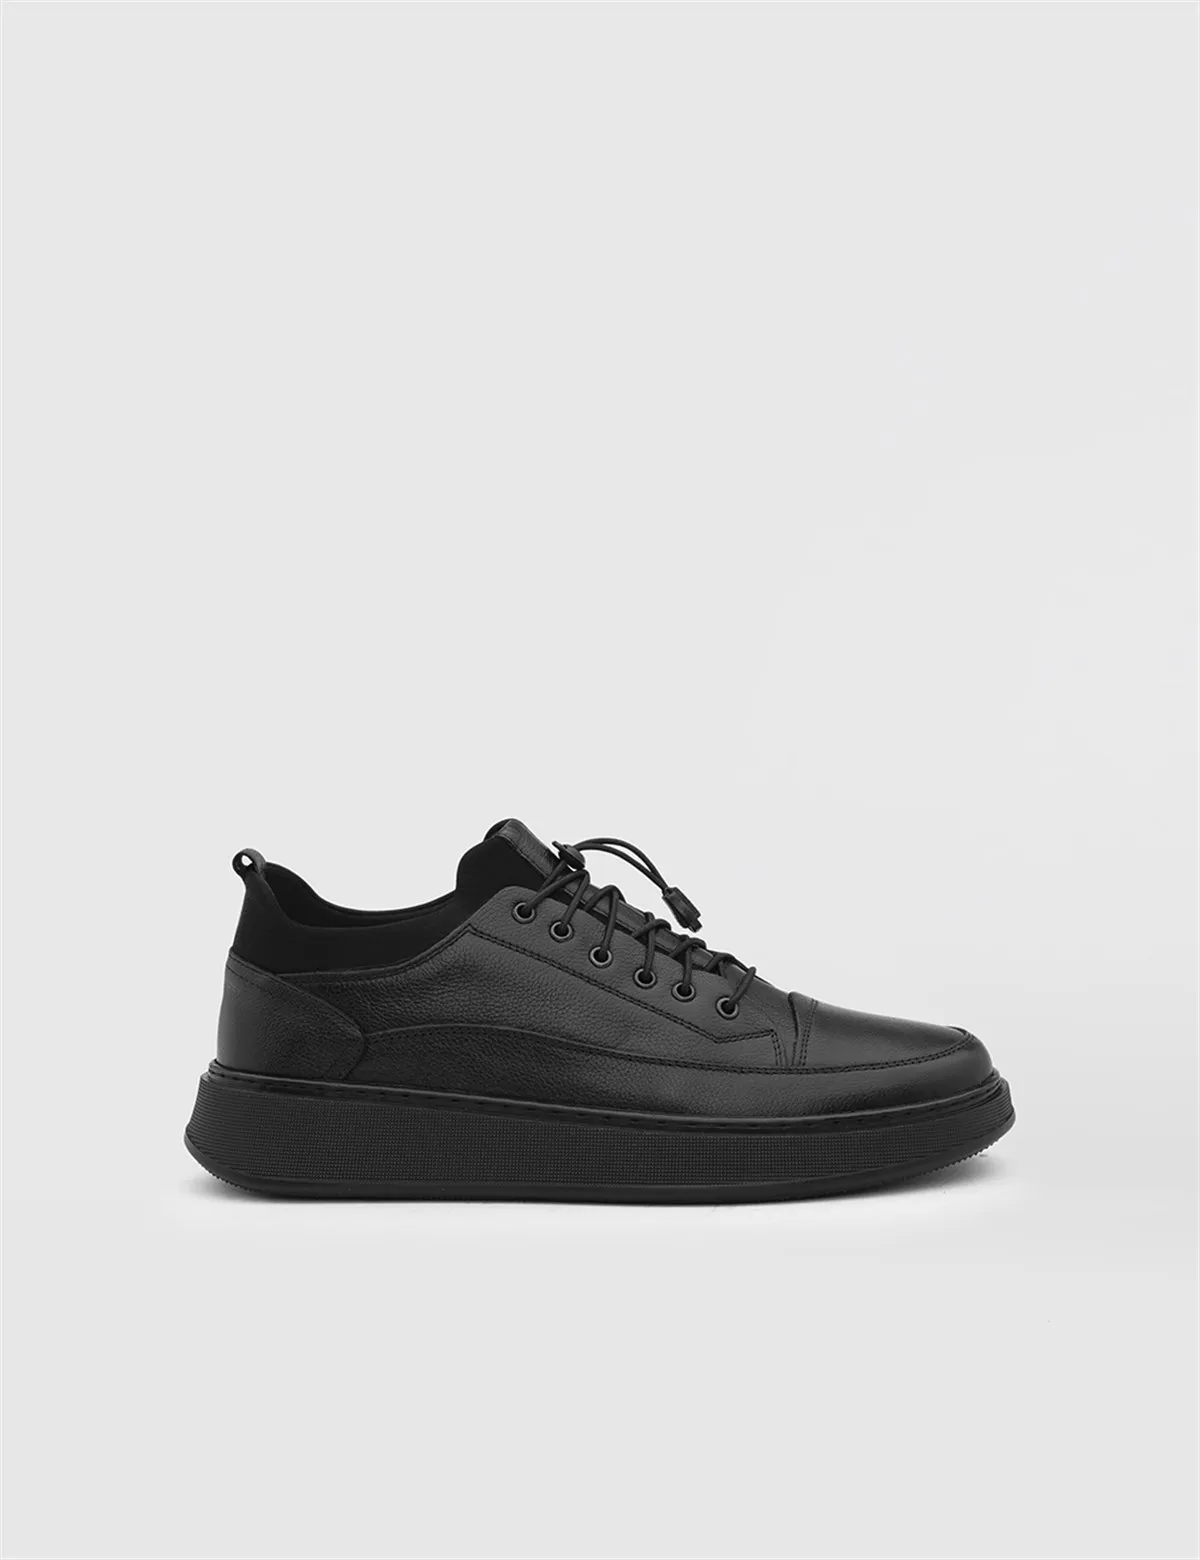 

ILVi-Genuine Leather Handmade İsatis Black Floater Sneaker Man's Shoes 2022 Fall/Winter